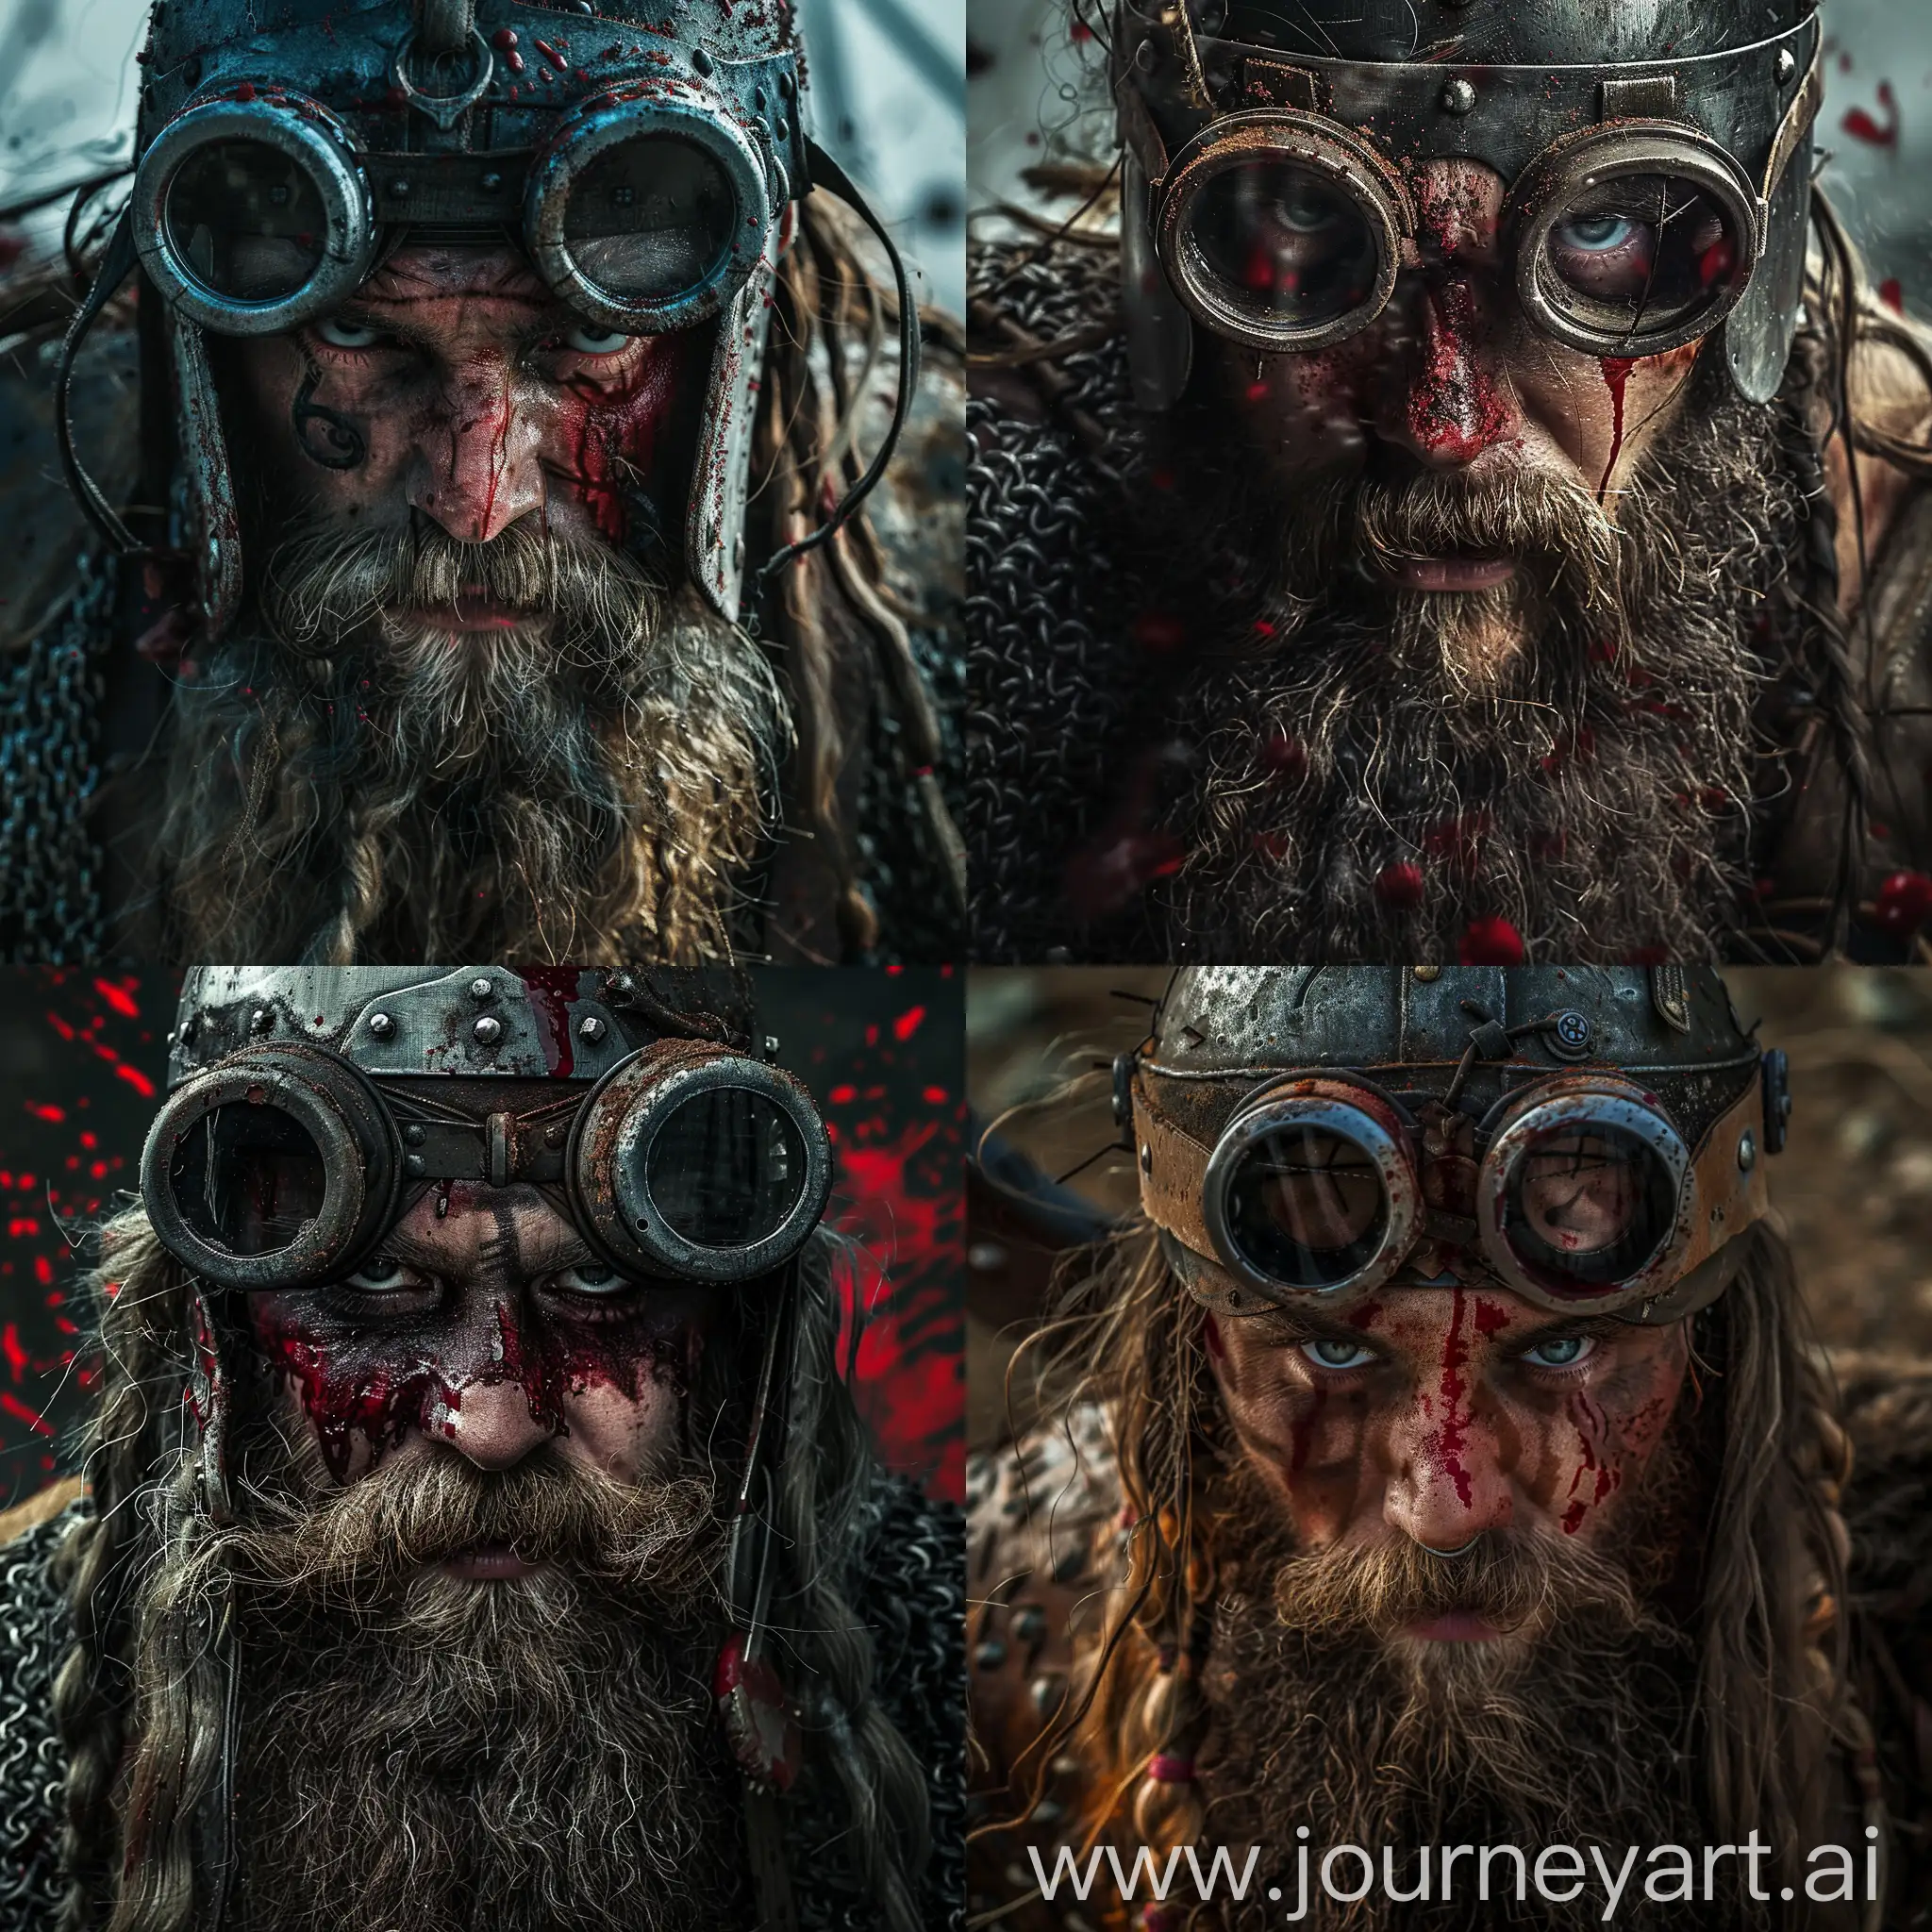 Intense-Viking-Warrior-Portrait-in-Battle-Scene